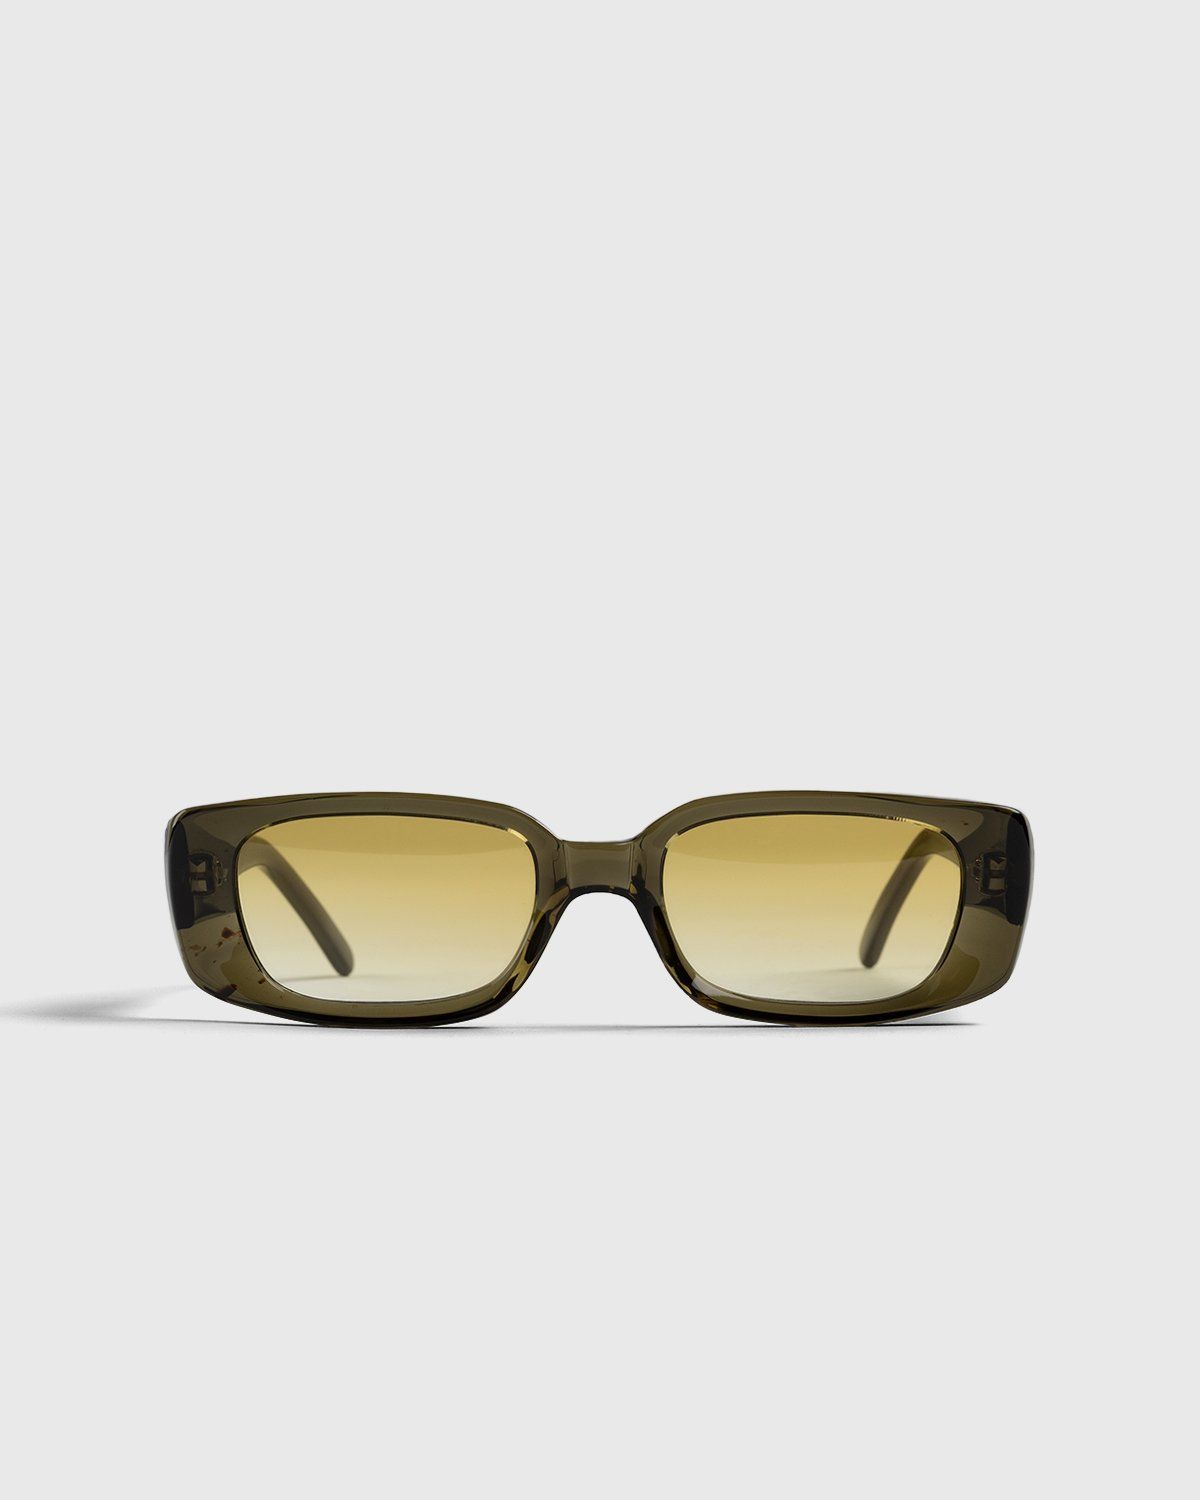 Our Legacy – Samhain Sunglasses Transparent Green - Sunglasses - Green - Image 1